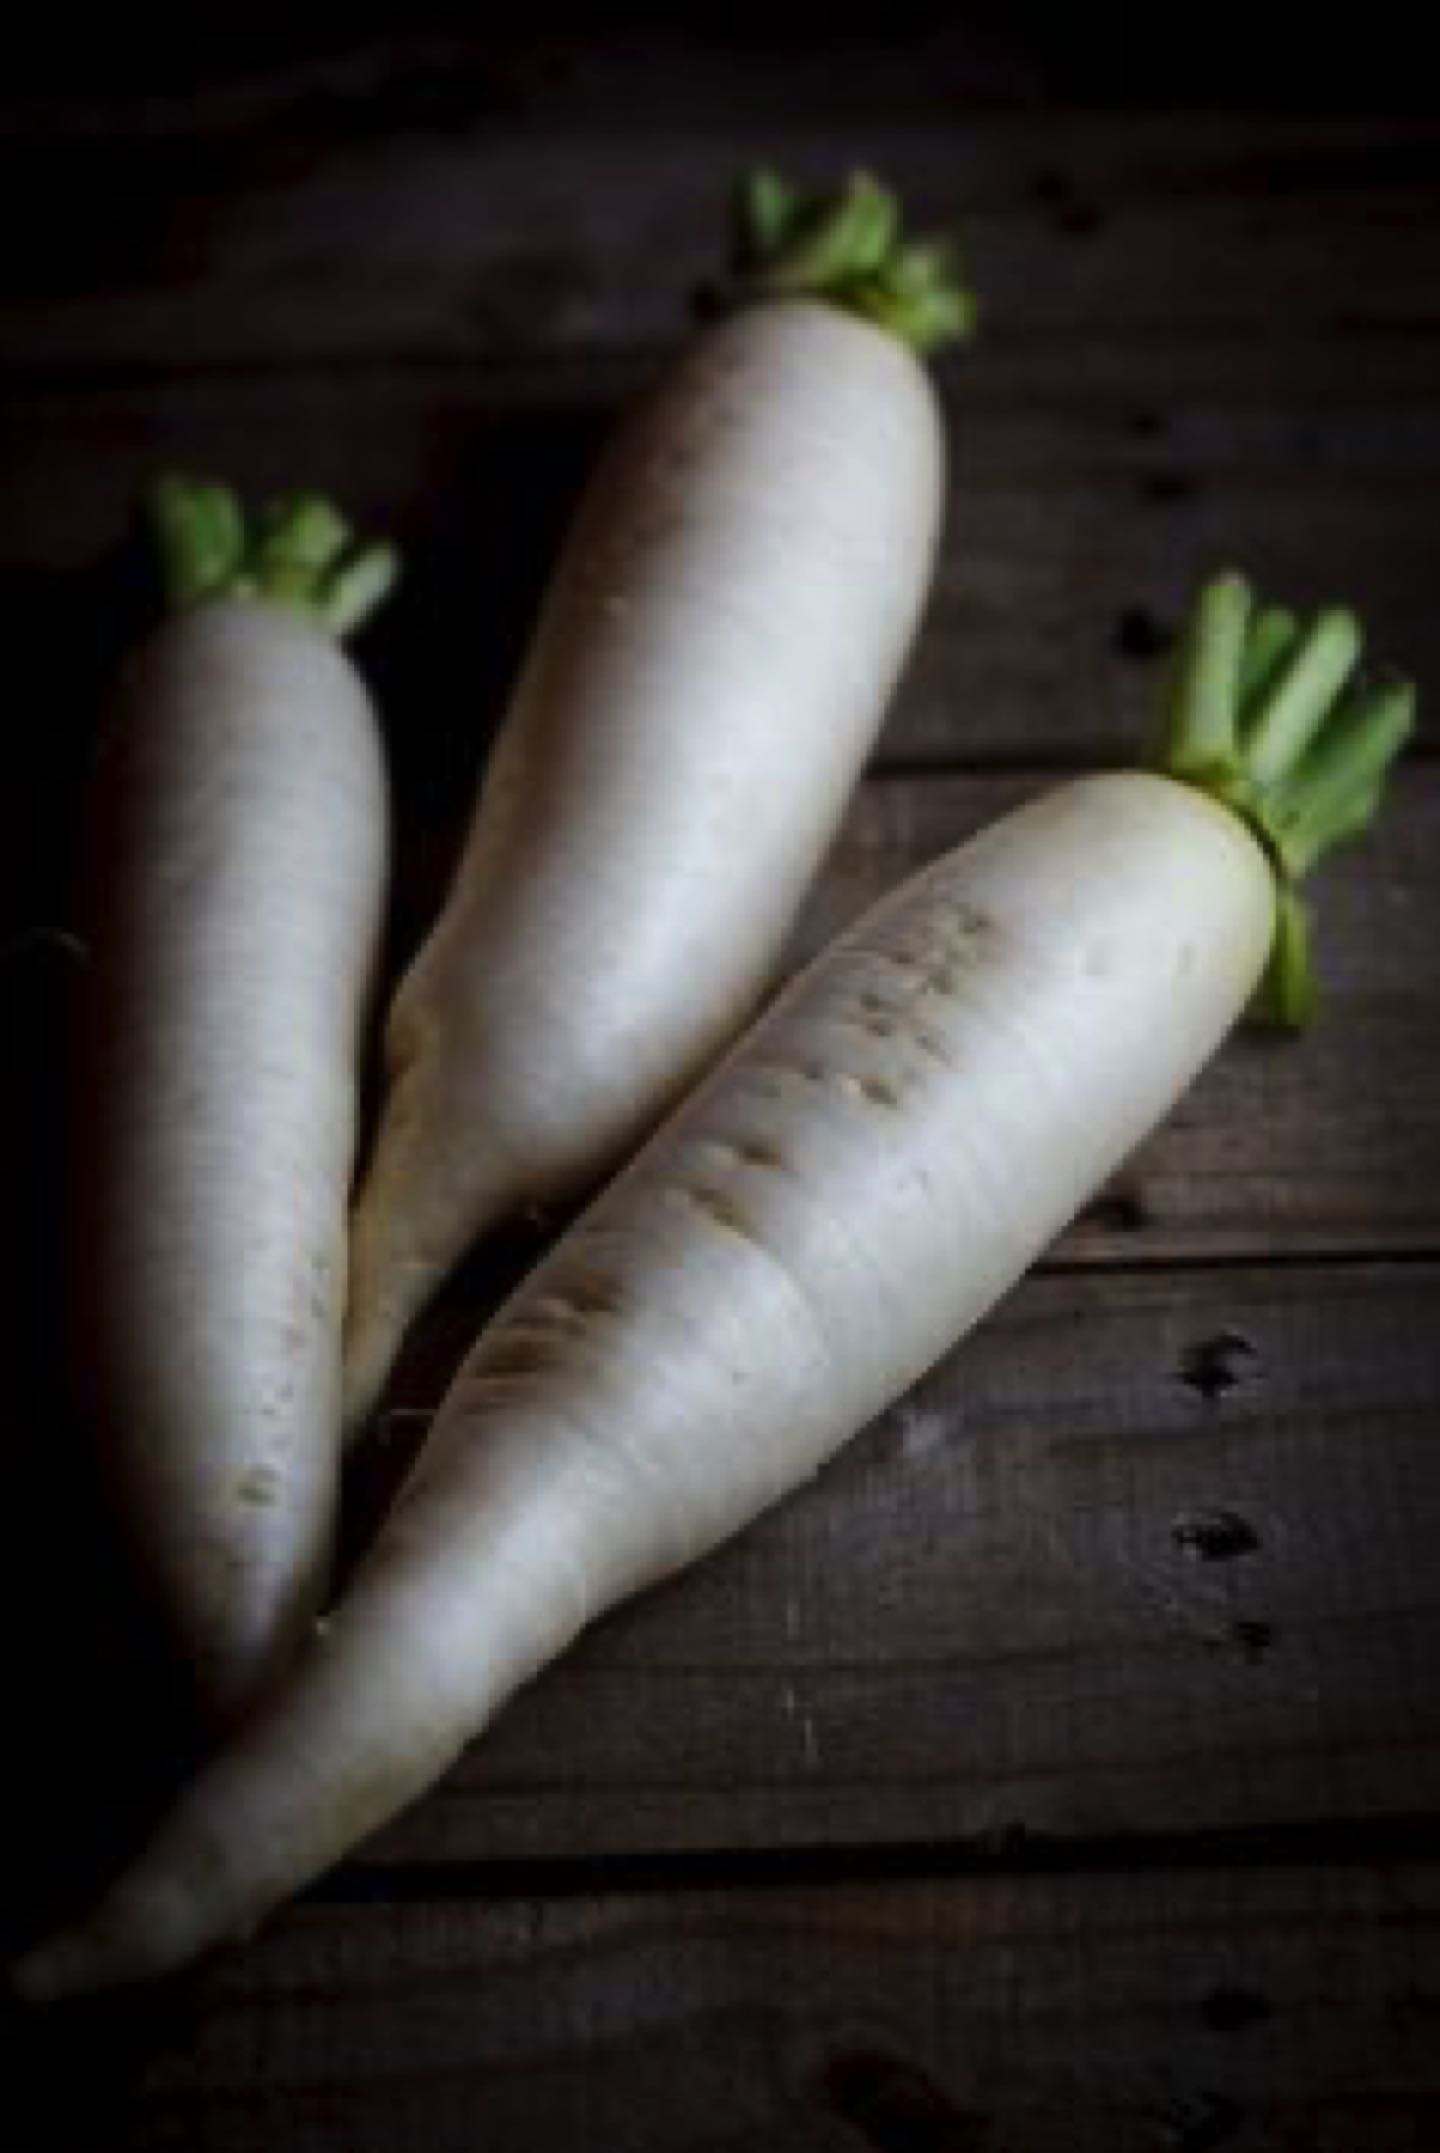 daikon zanahoria blanca